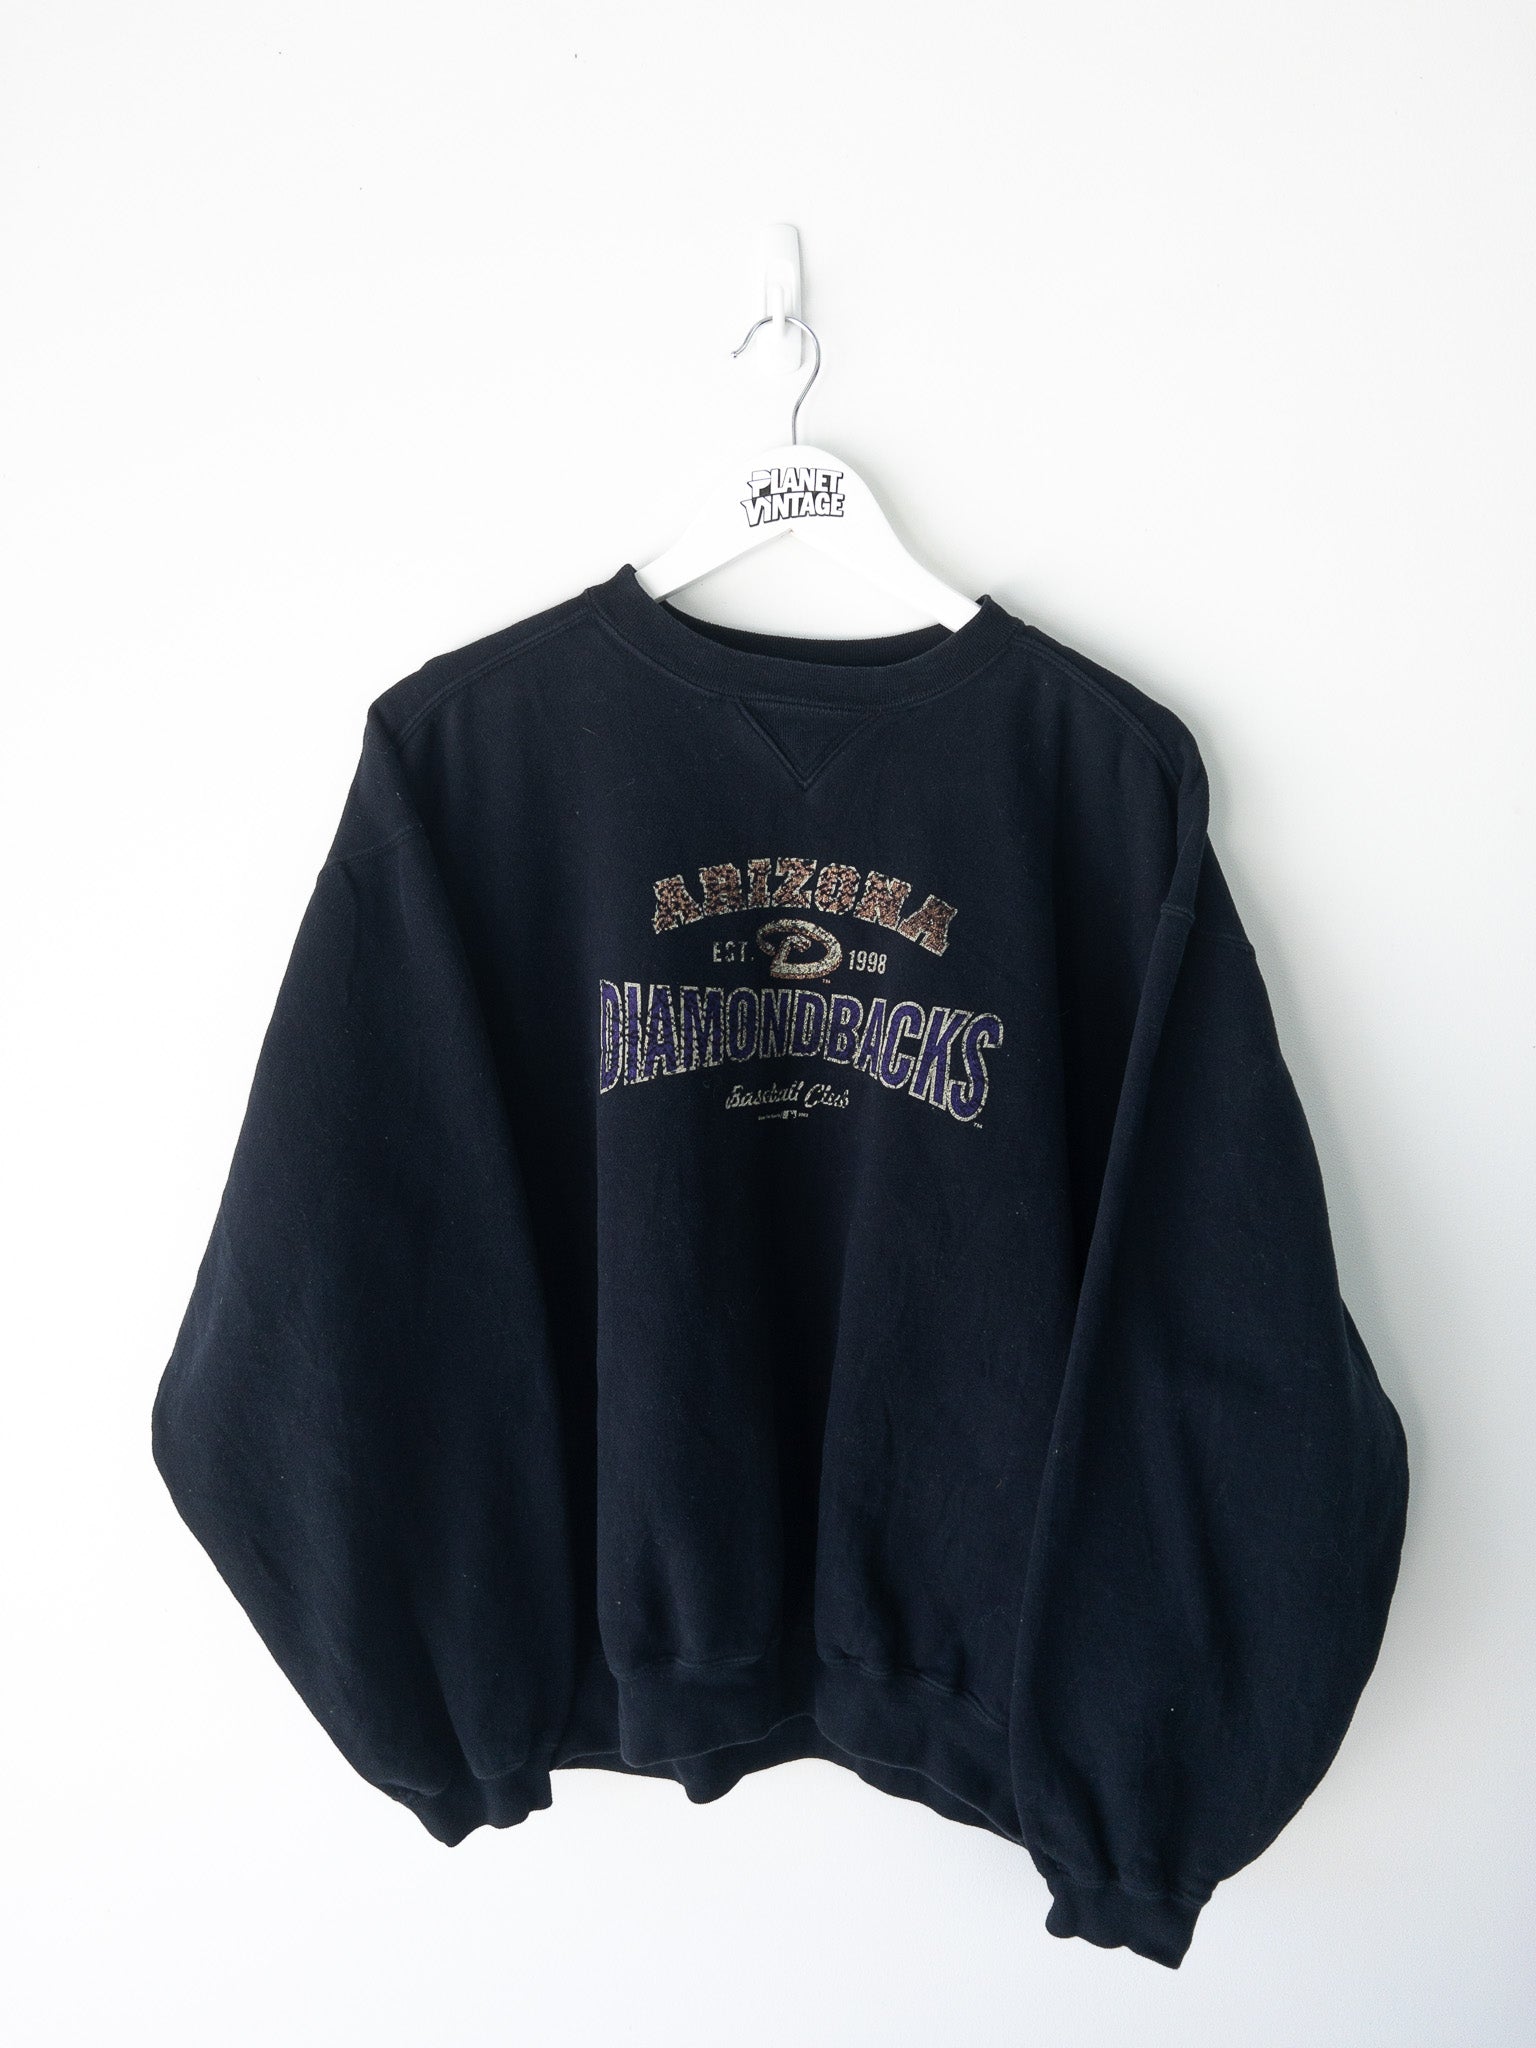 Vintage Arizona Diamondbacks 2002 Sweatshirt (M)